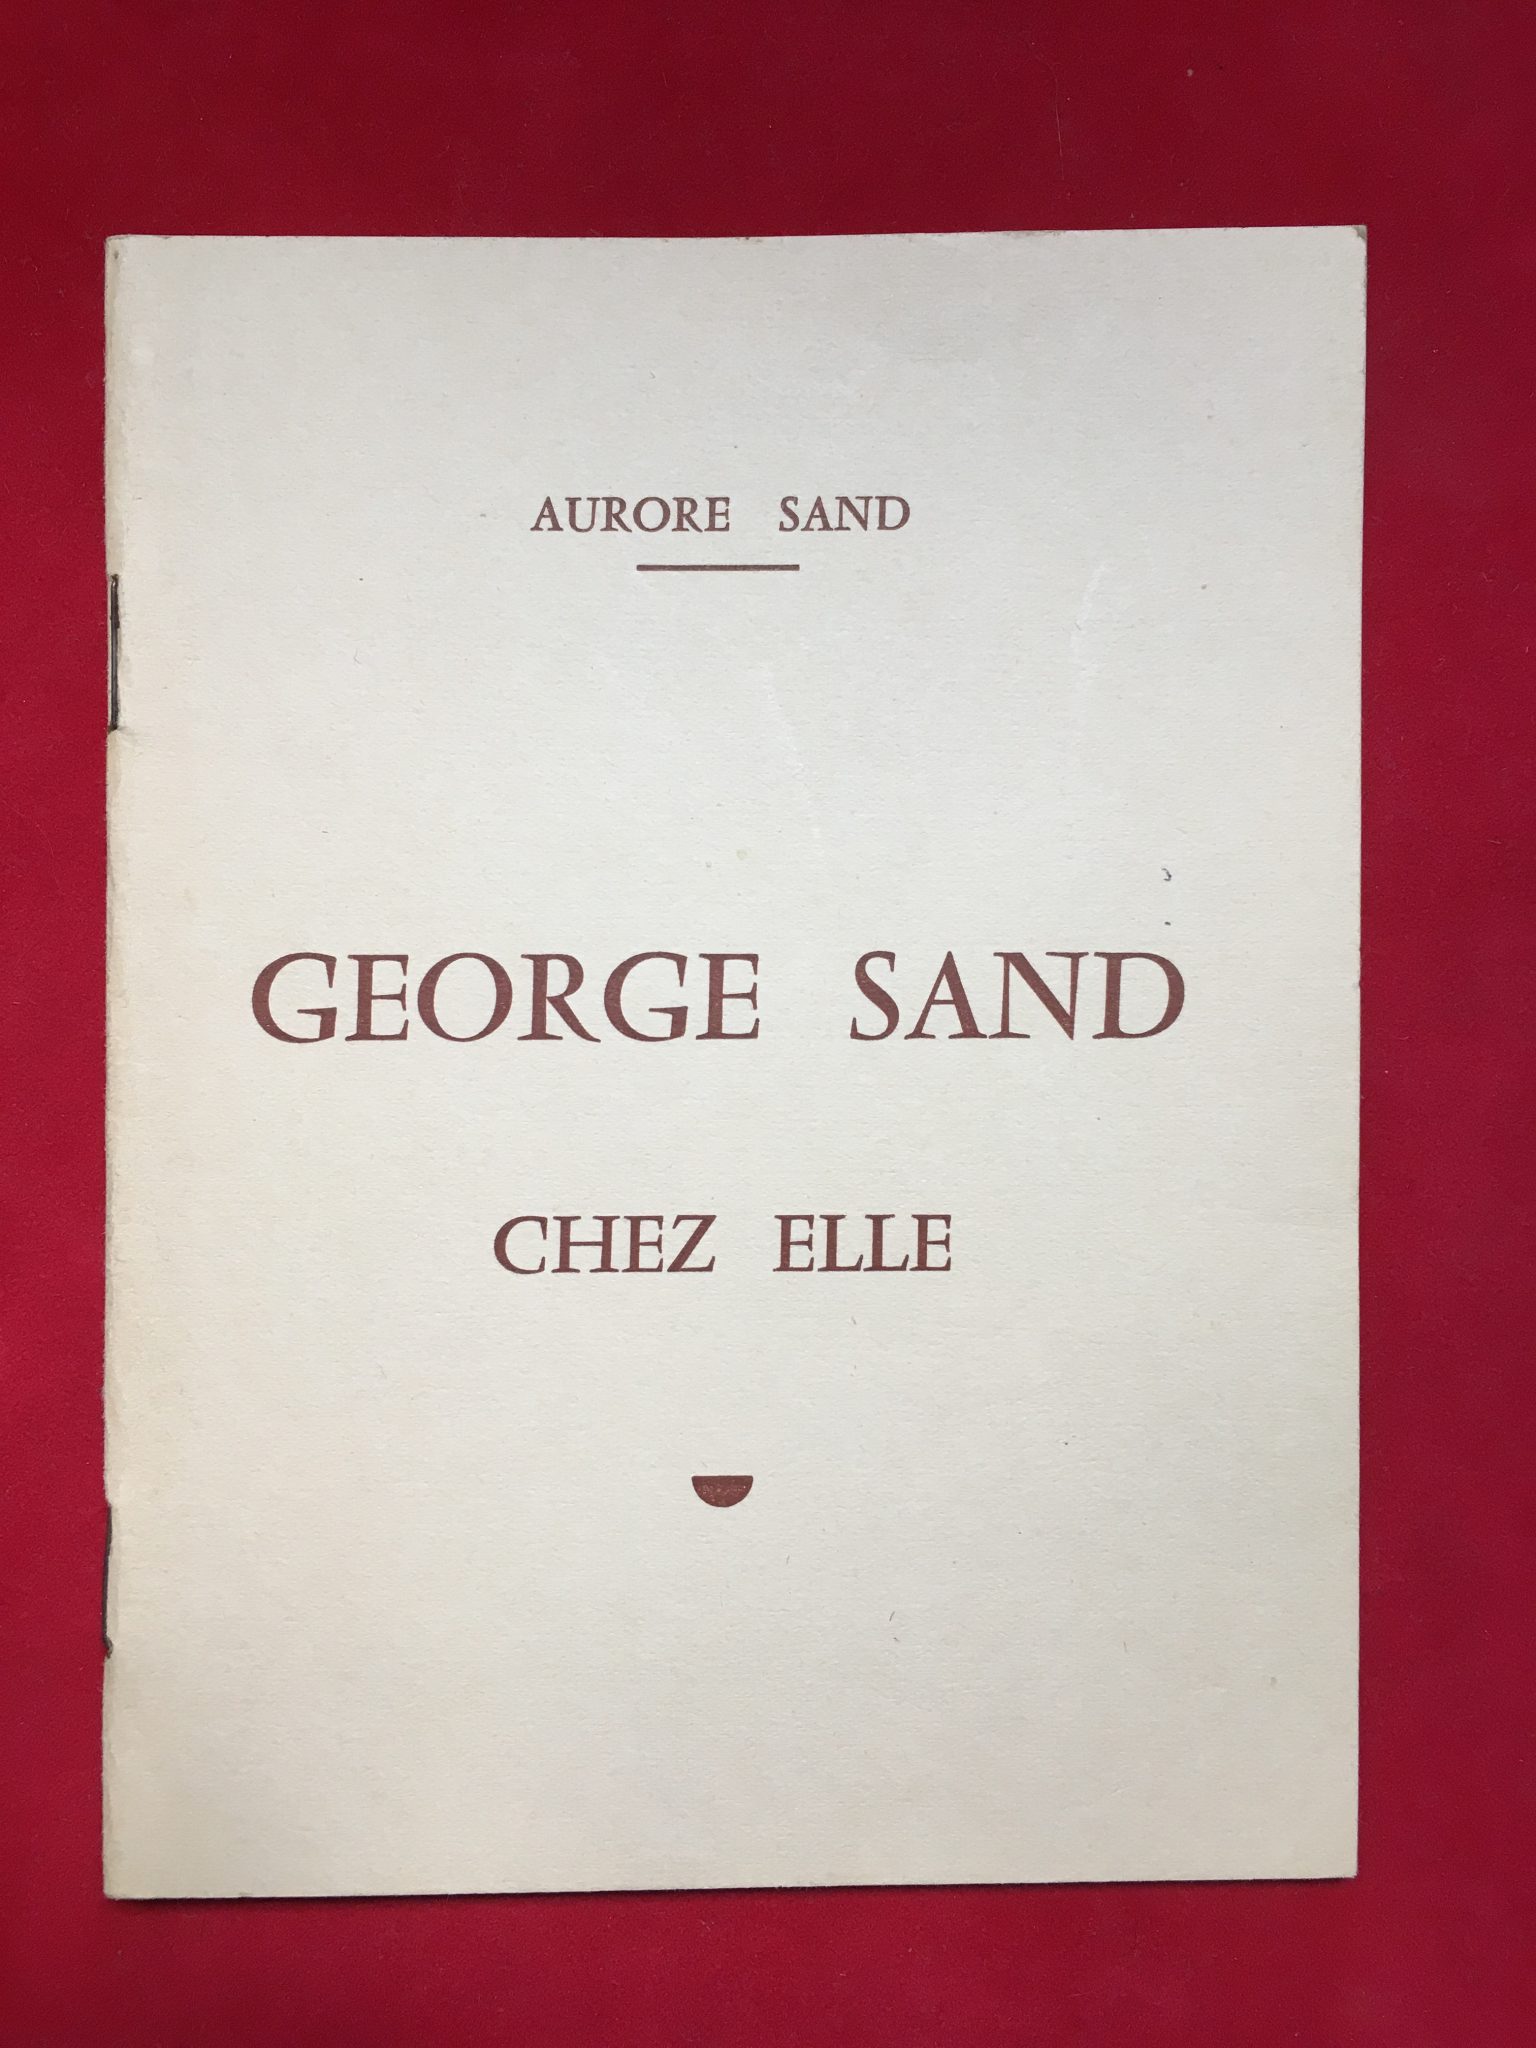 George Sand chez elle